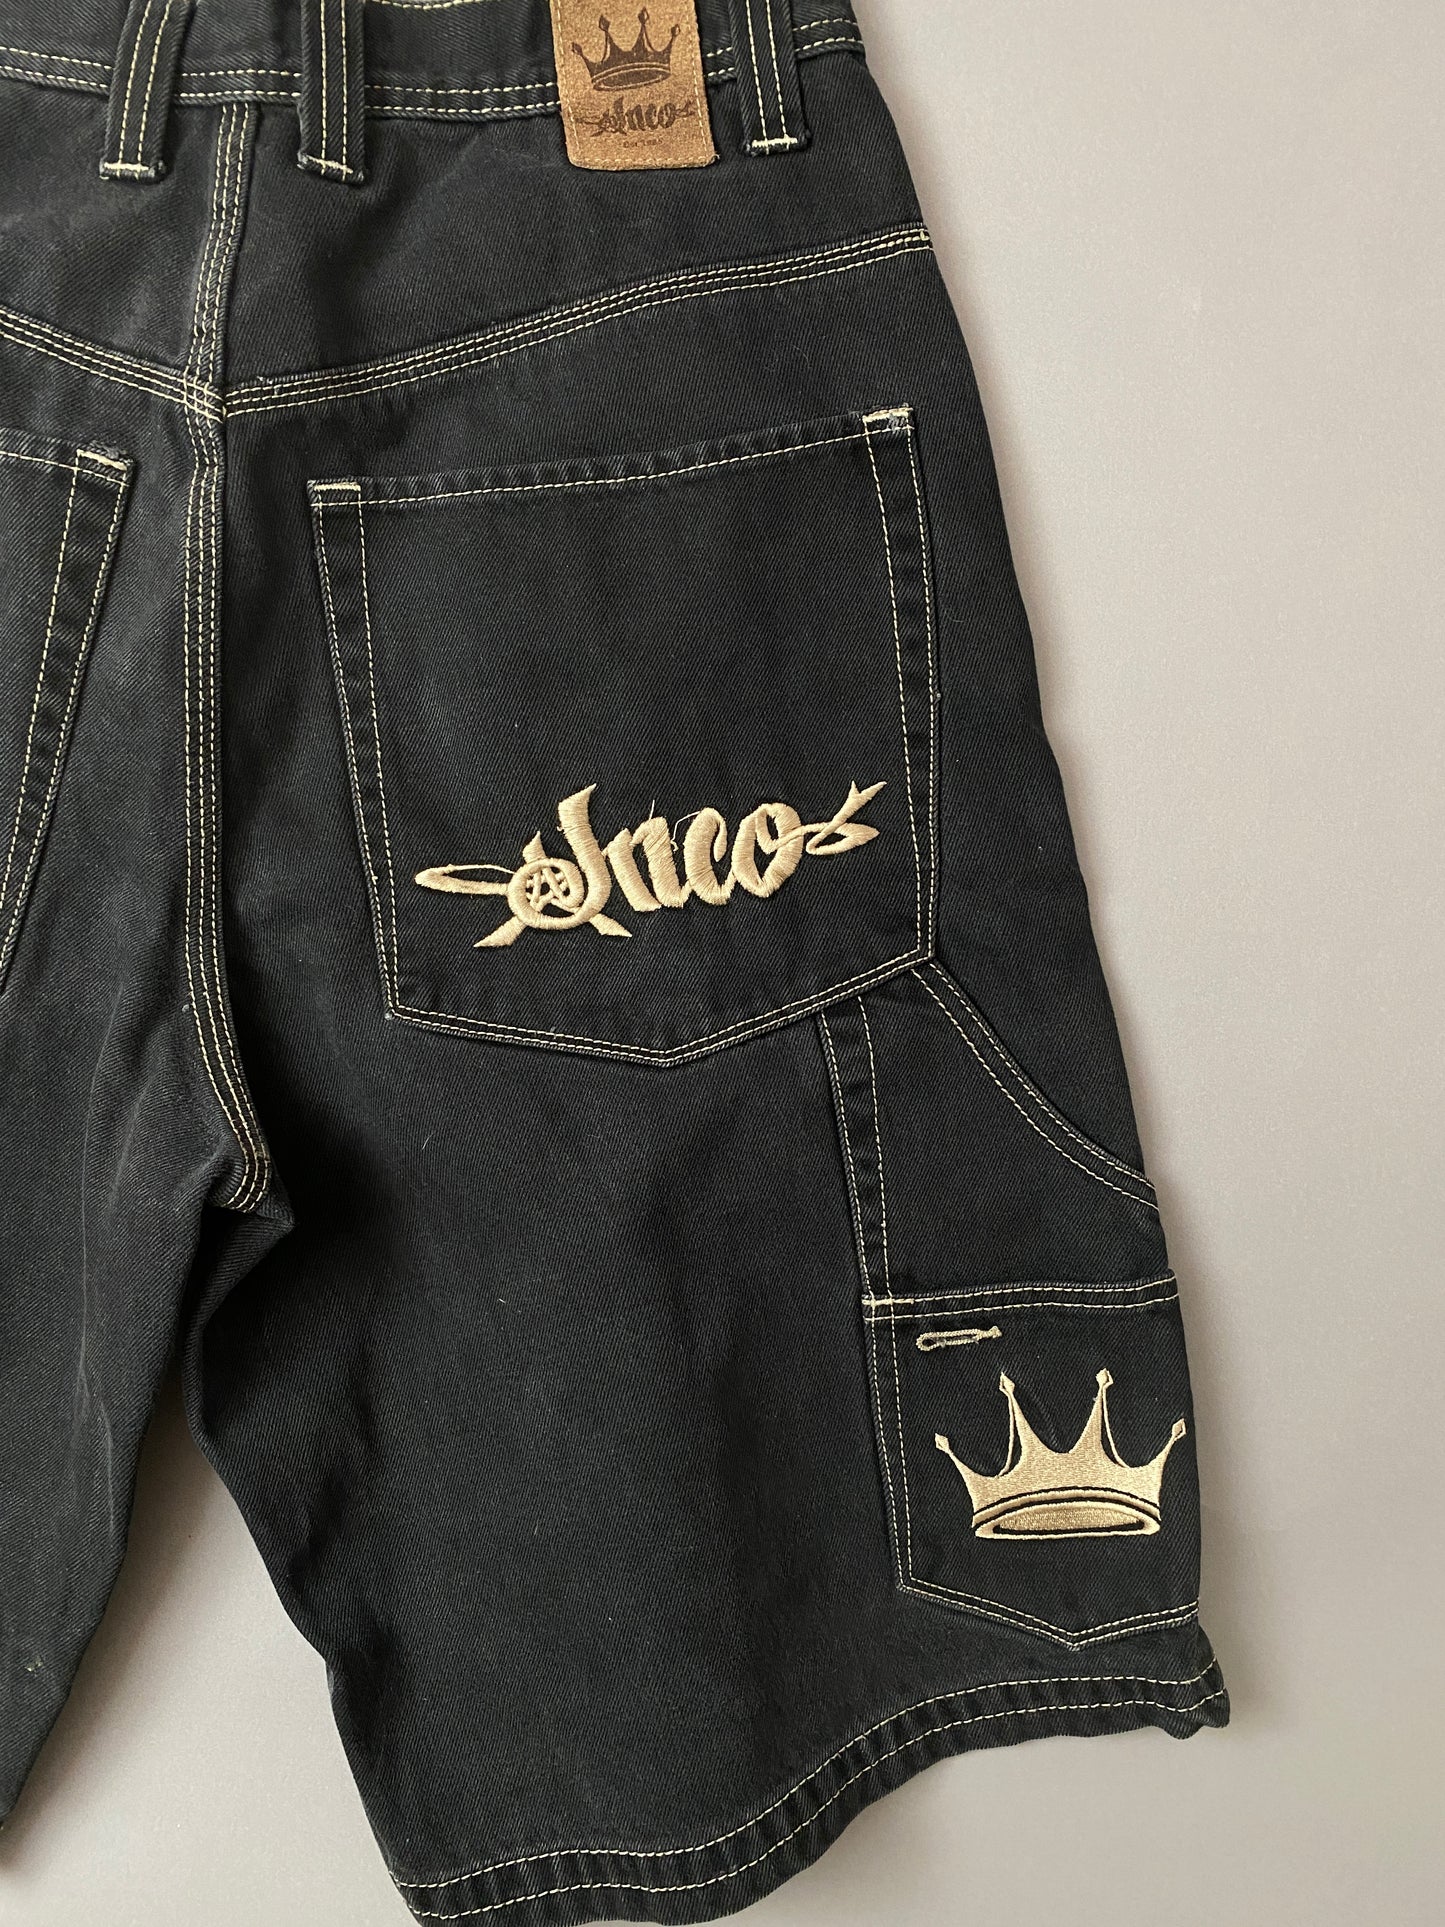 Shorts JNCO Vintage - 34